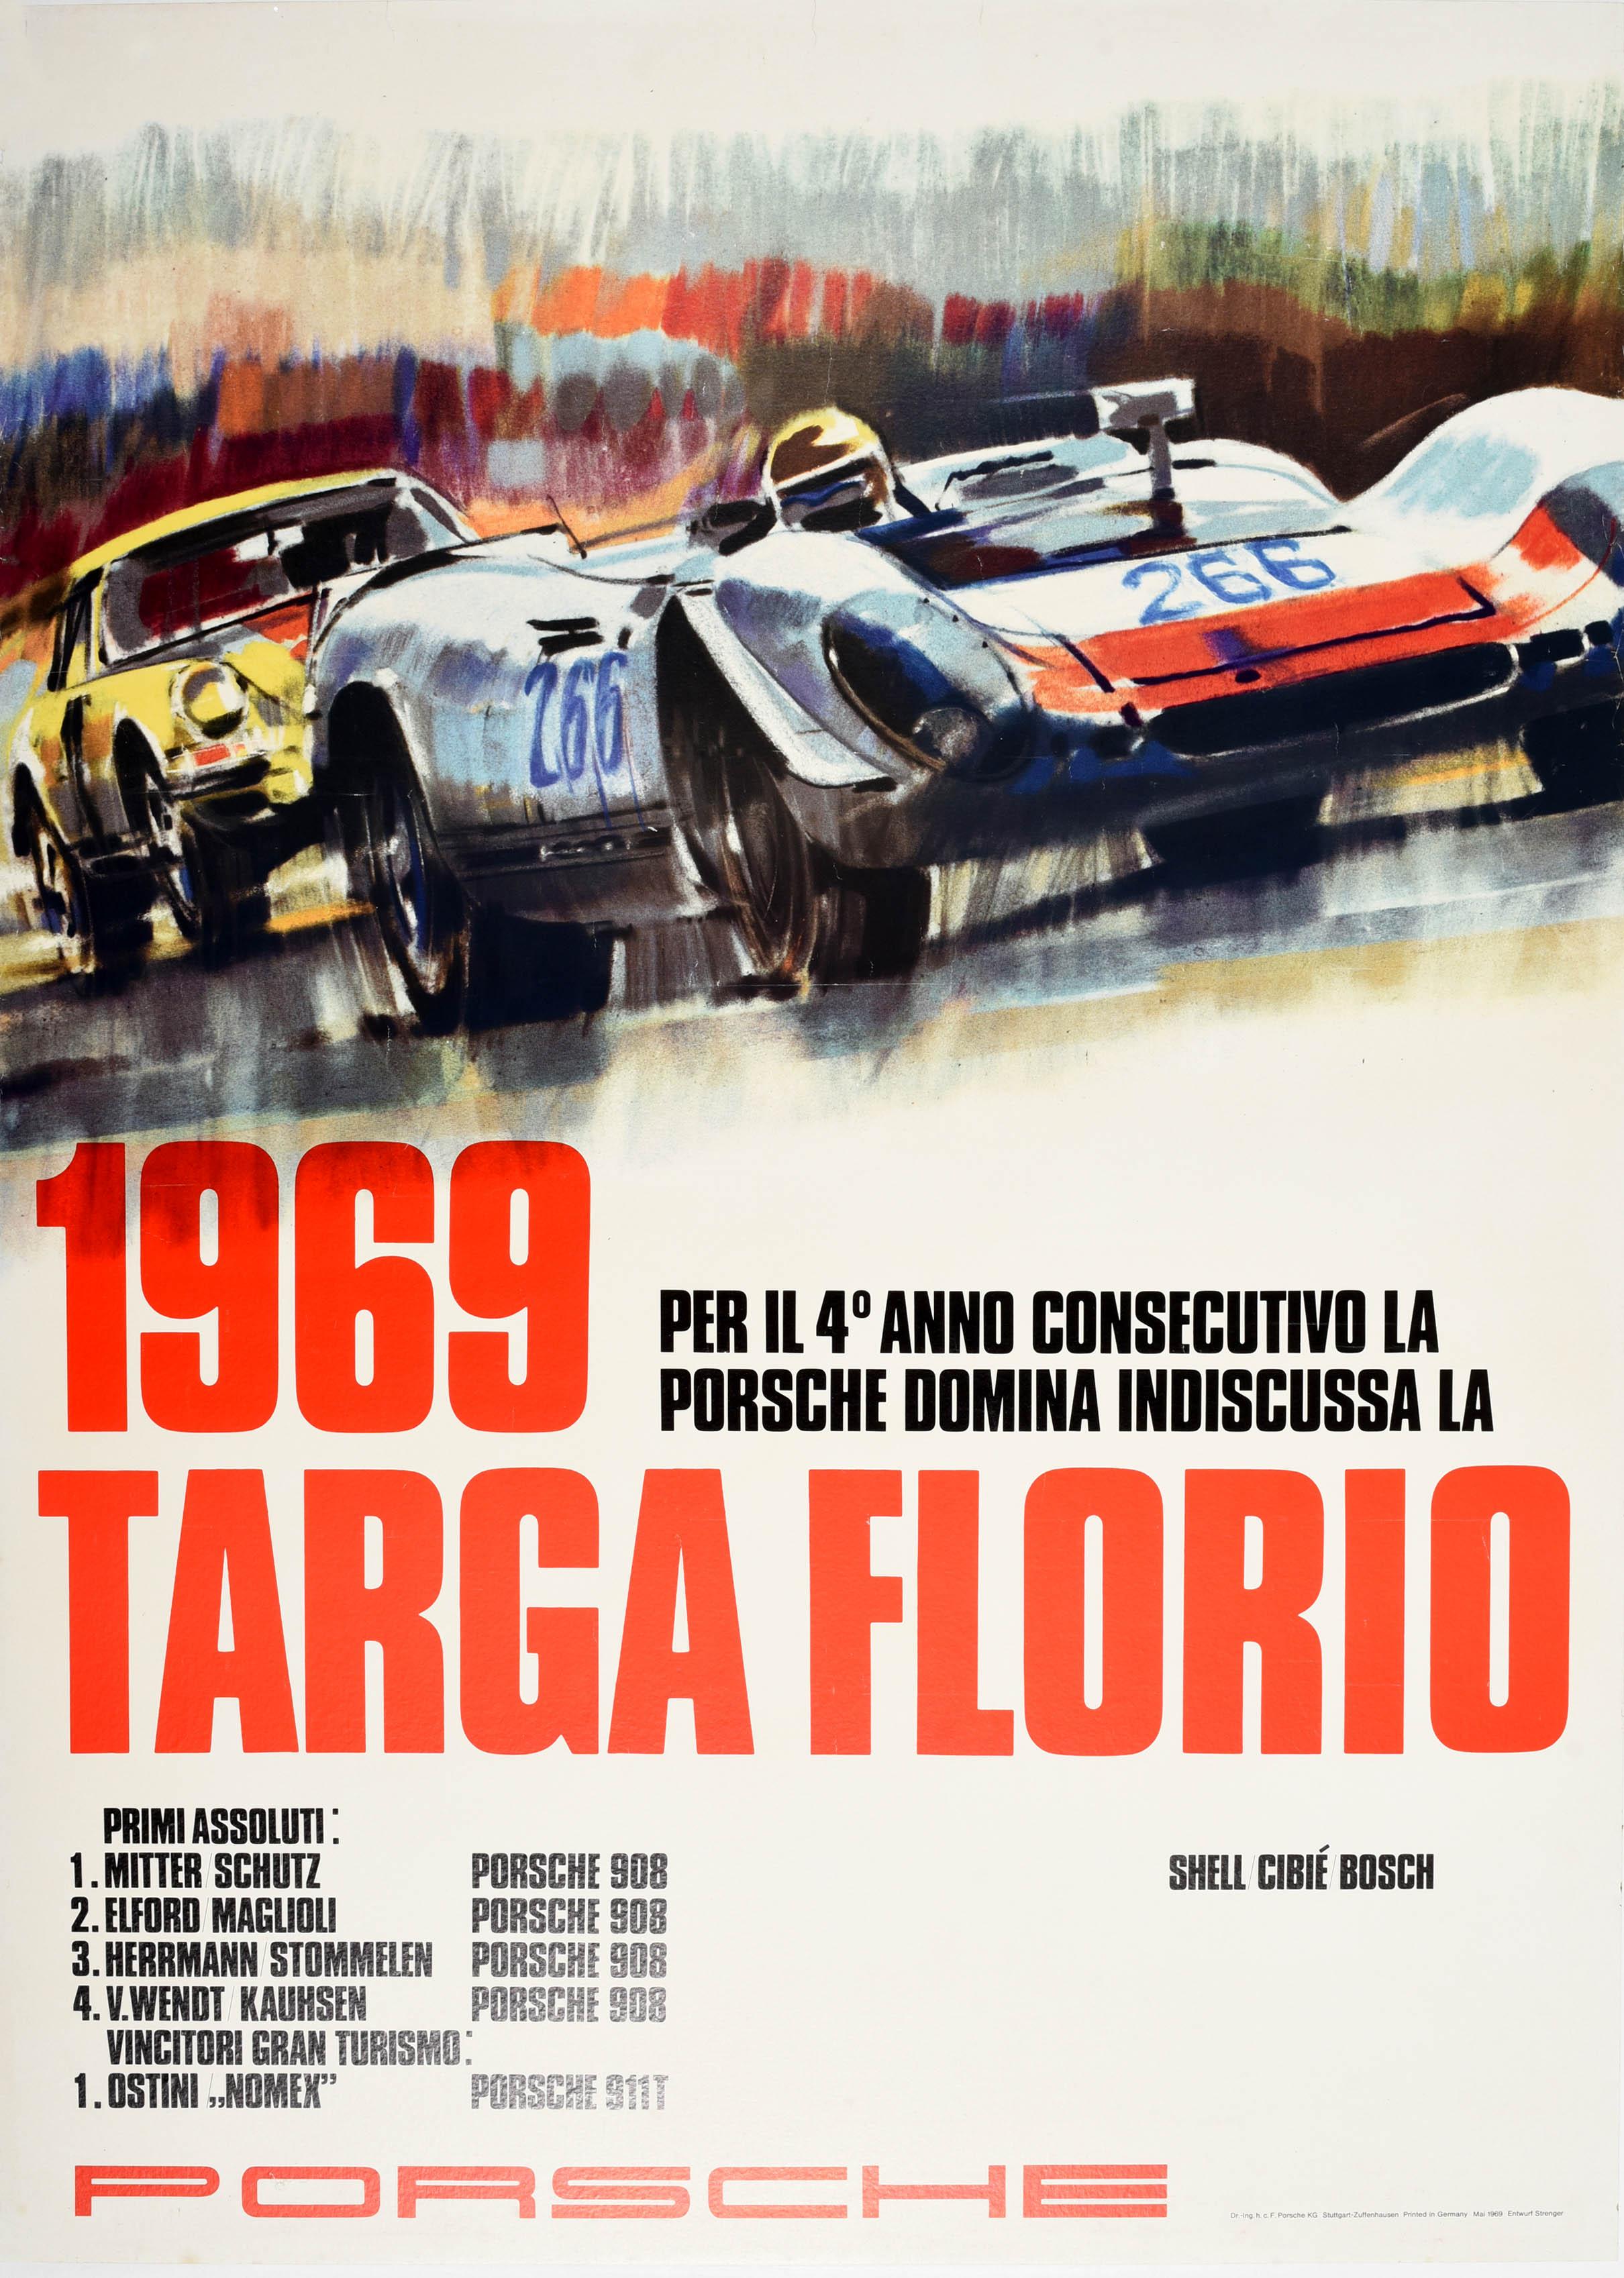 Strenger Print - Original Vintage Poster Porsche 1969 Targa Florio Auto Racing Victory 908 911T